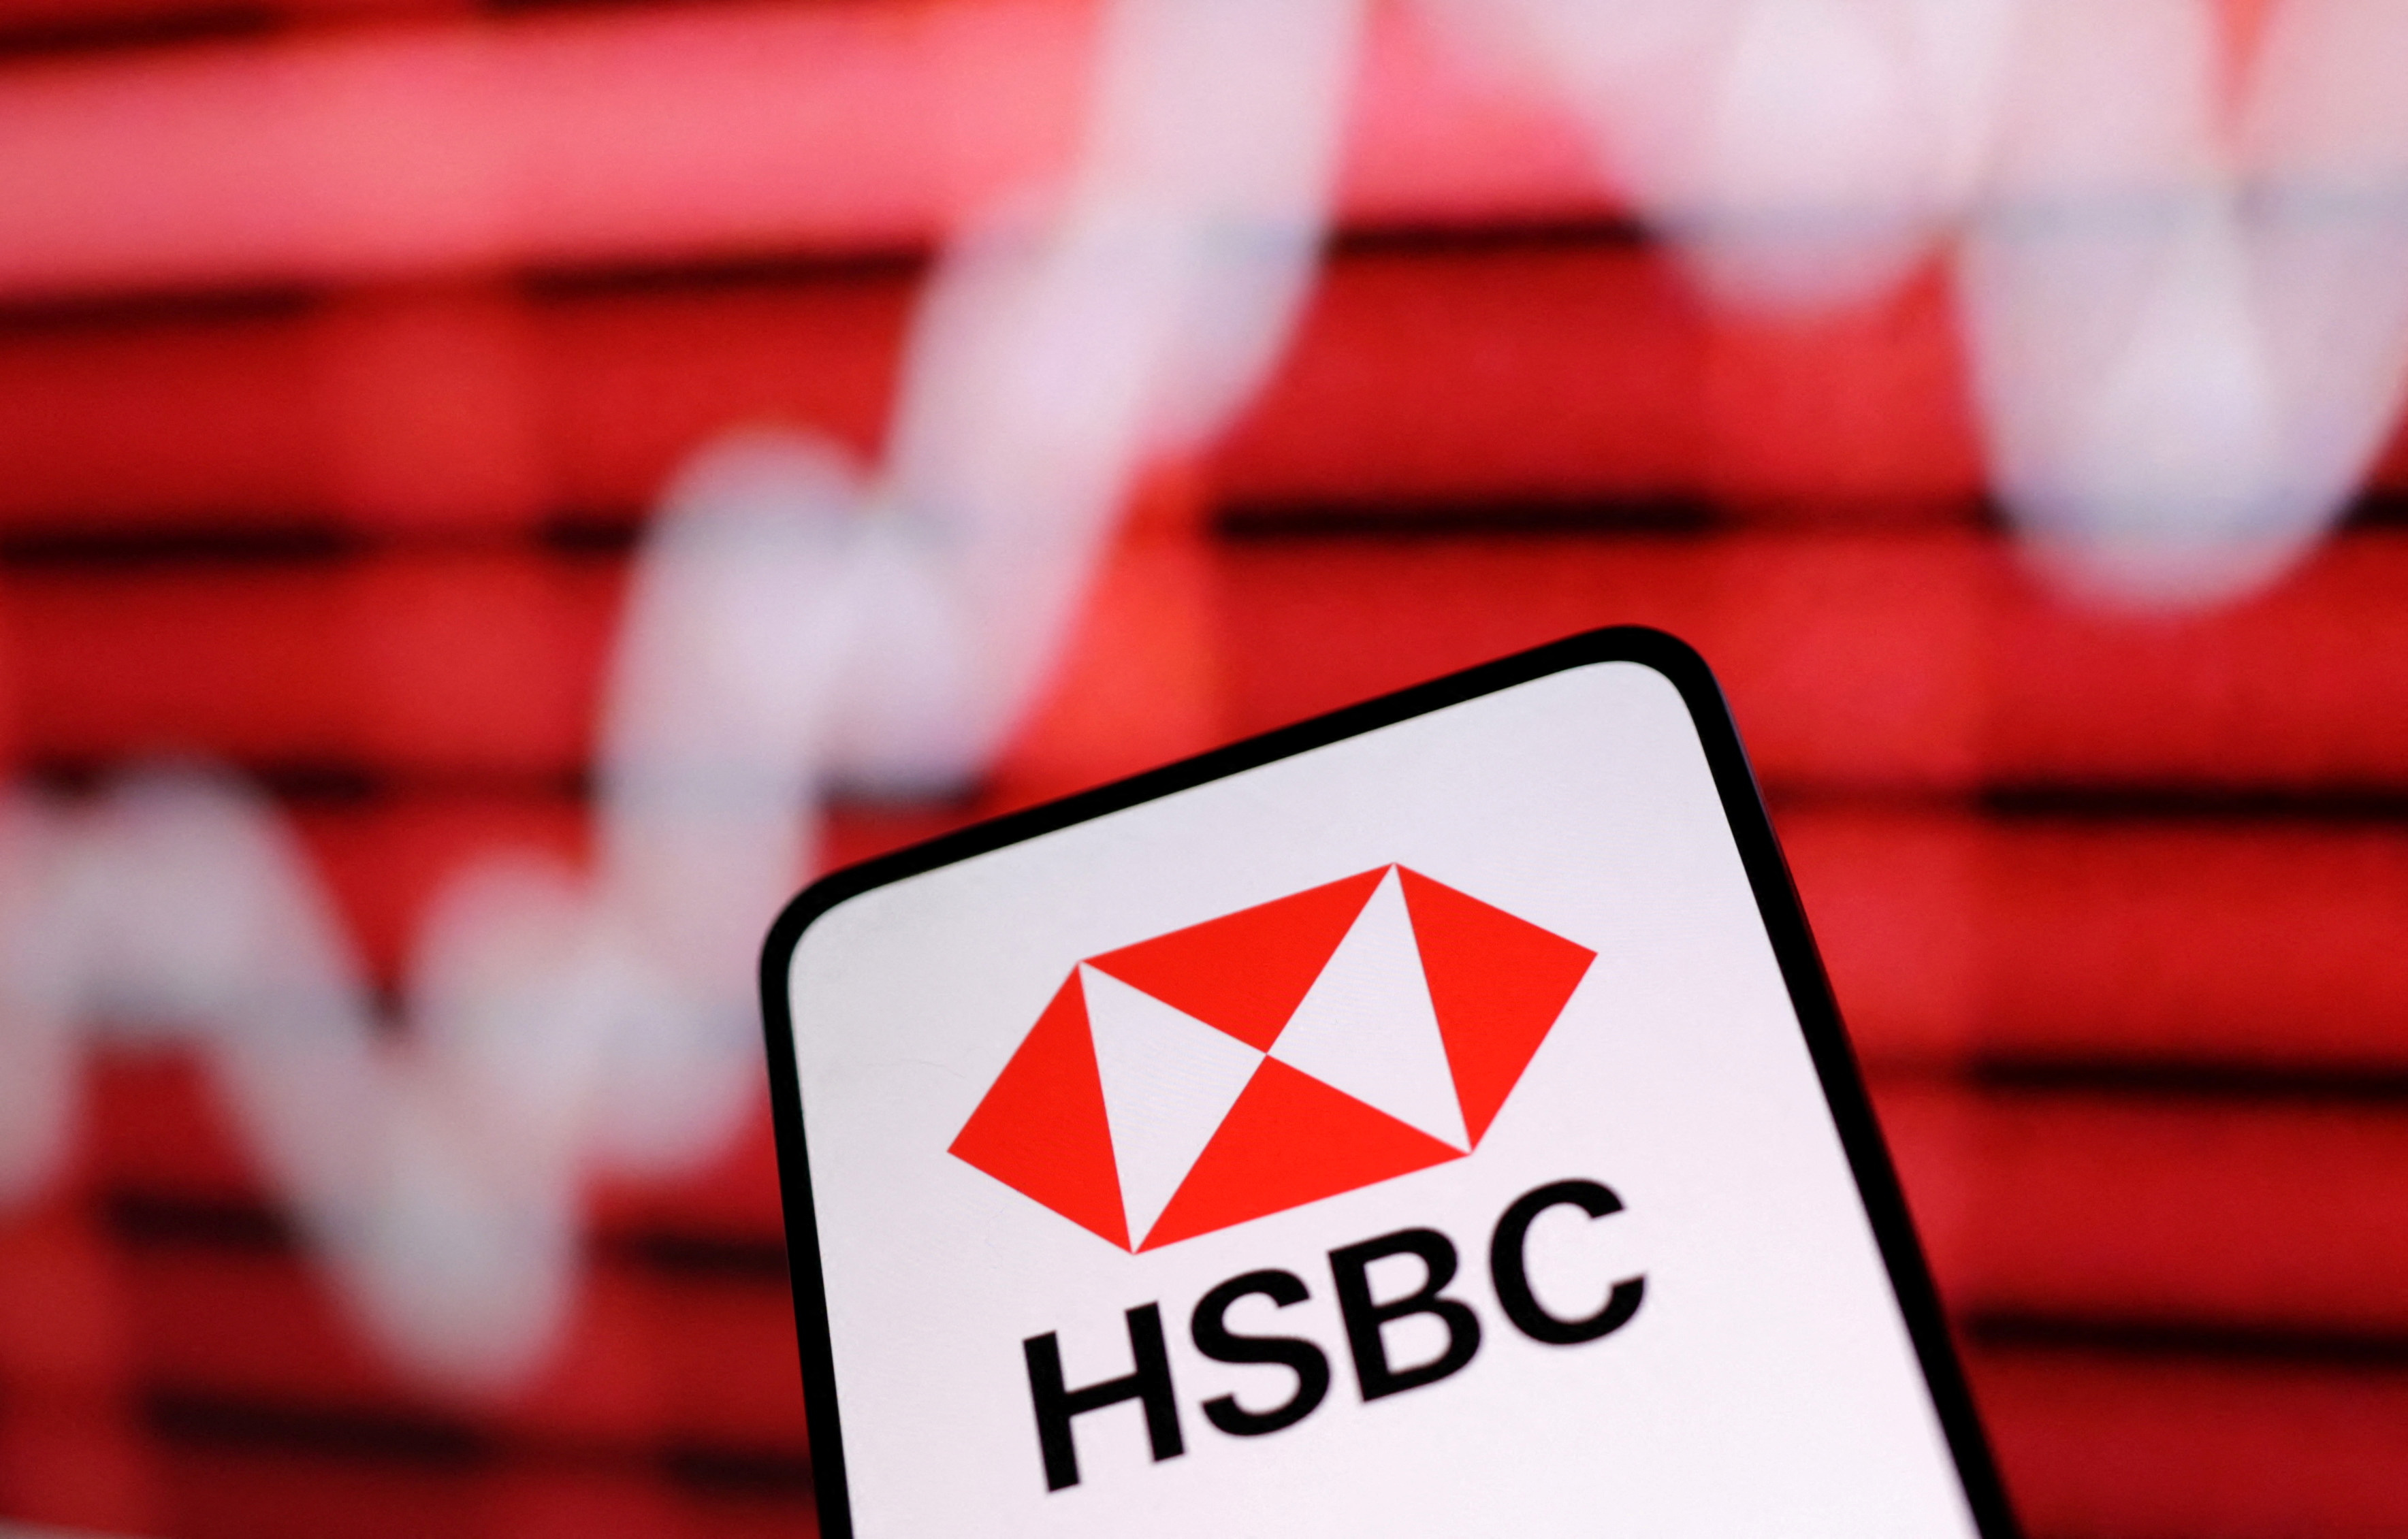 Illustration shows HSBC Bank logo and rising stock graph